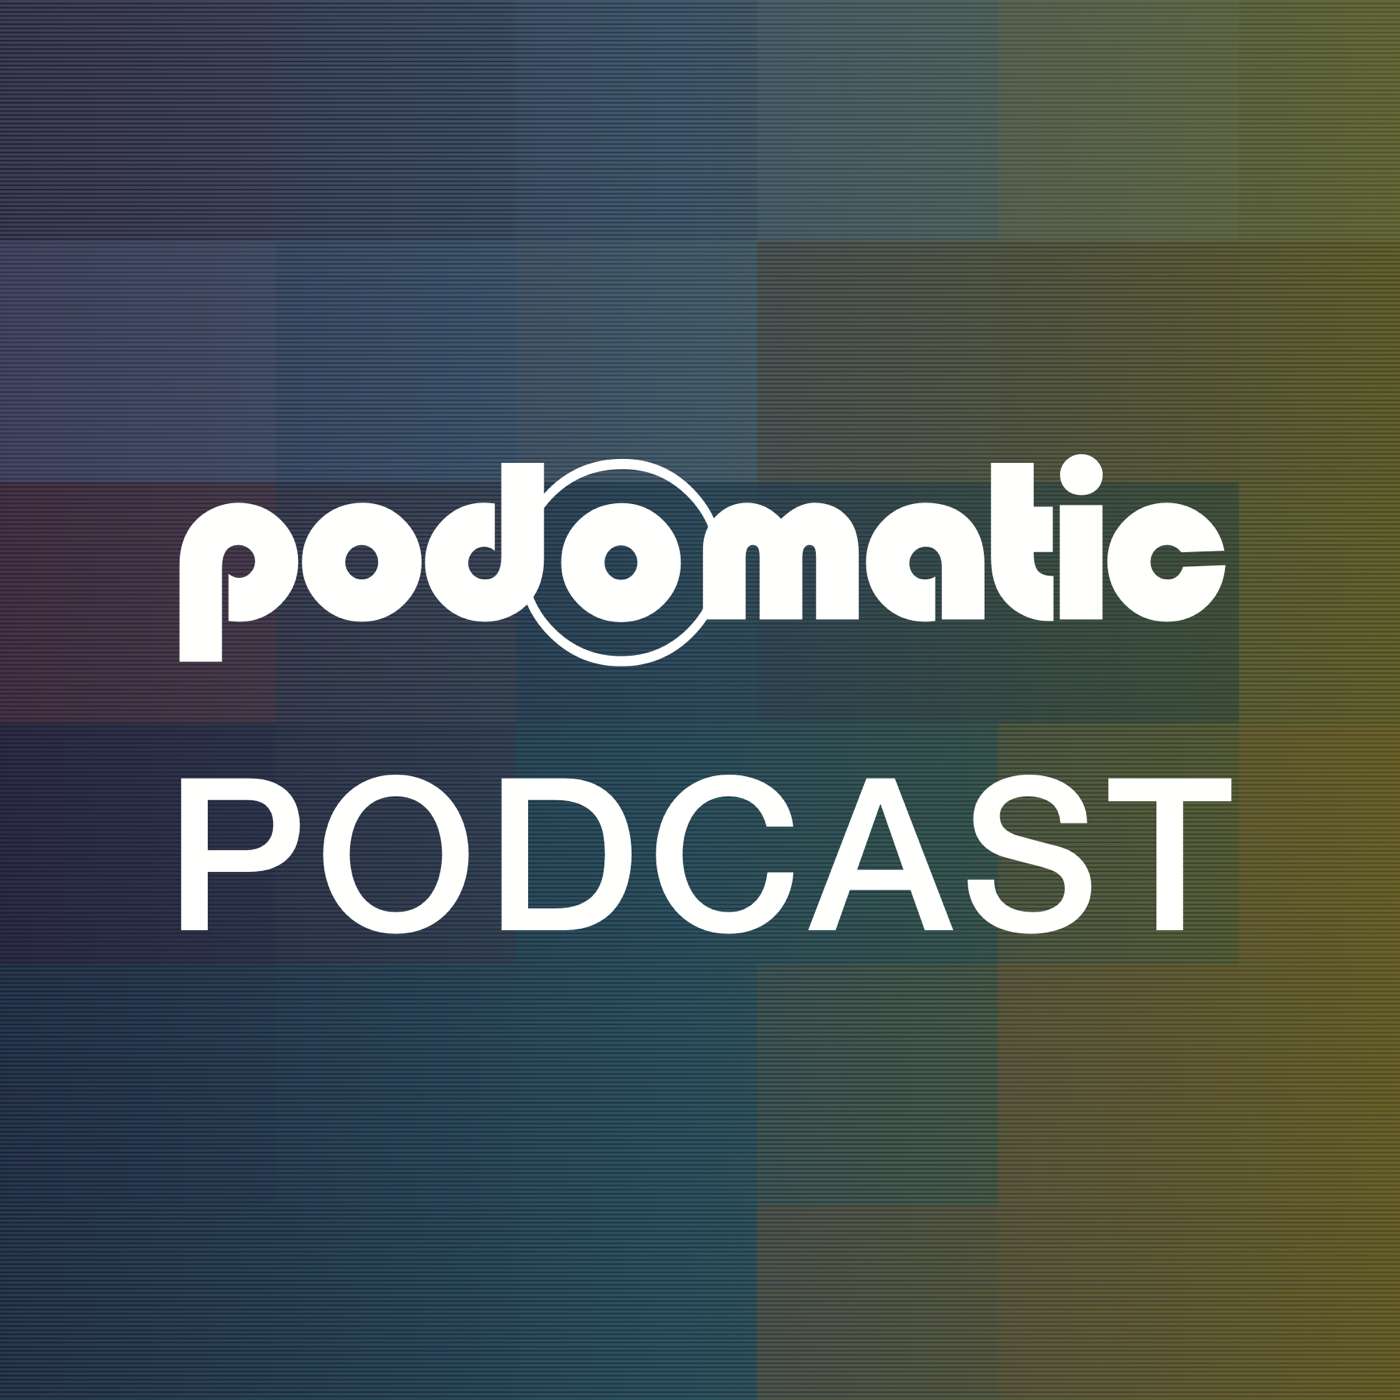 Paul Rando's Podcast